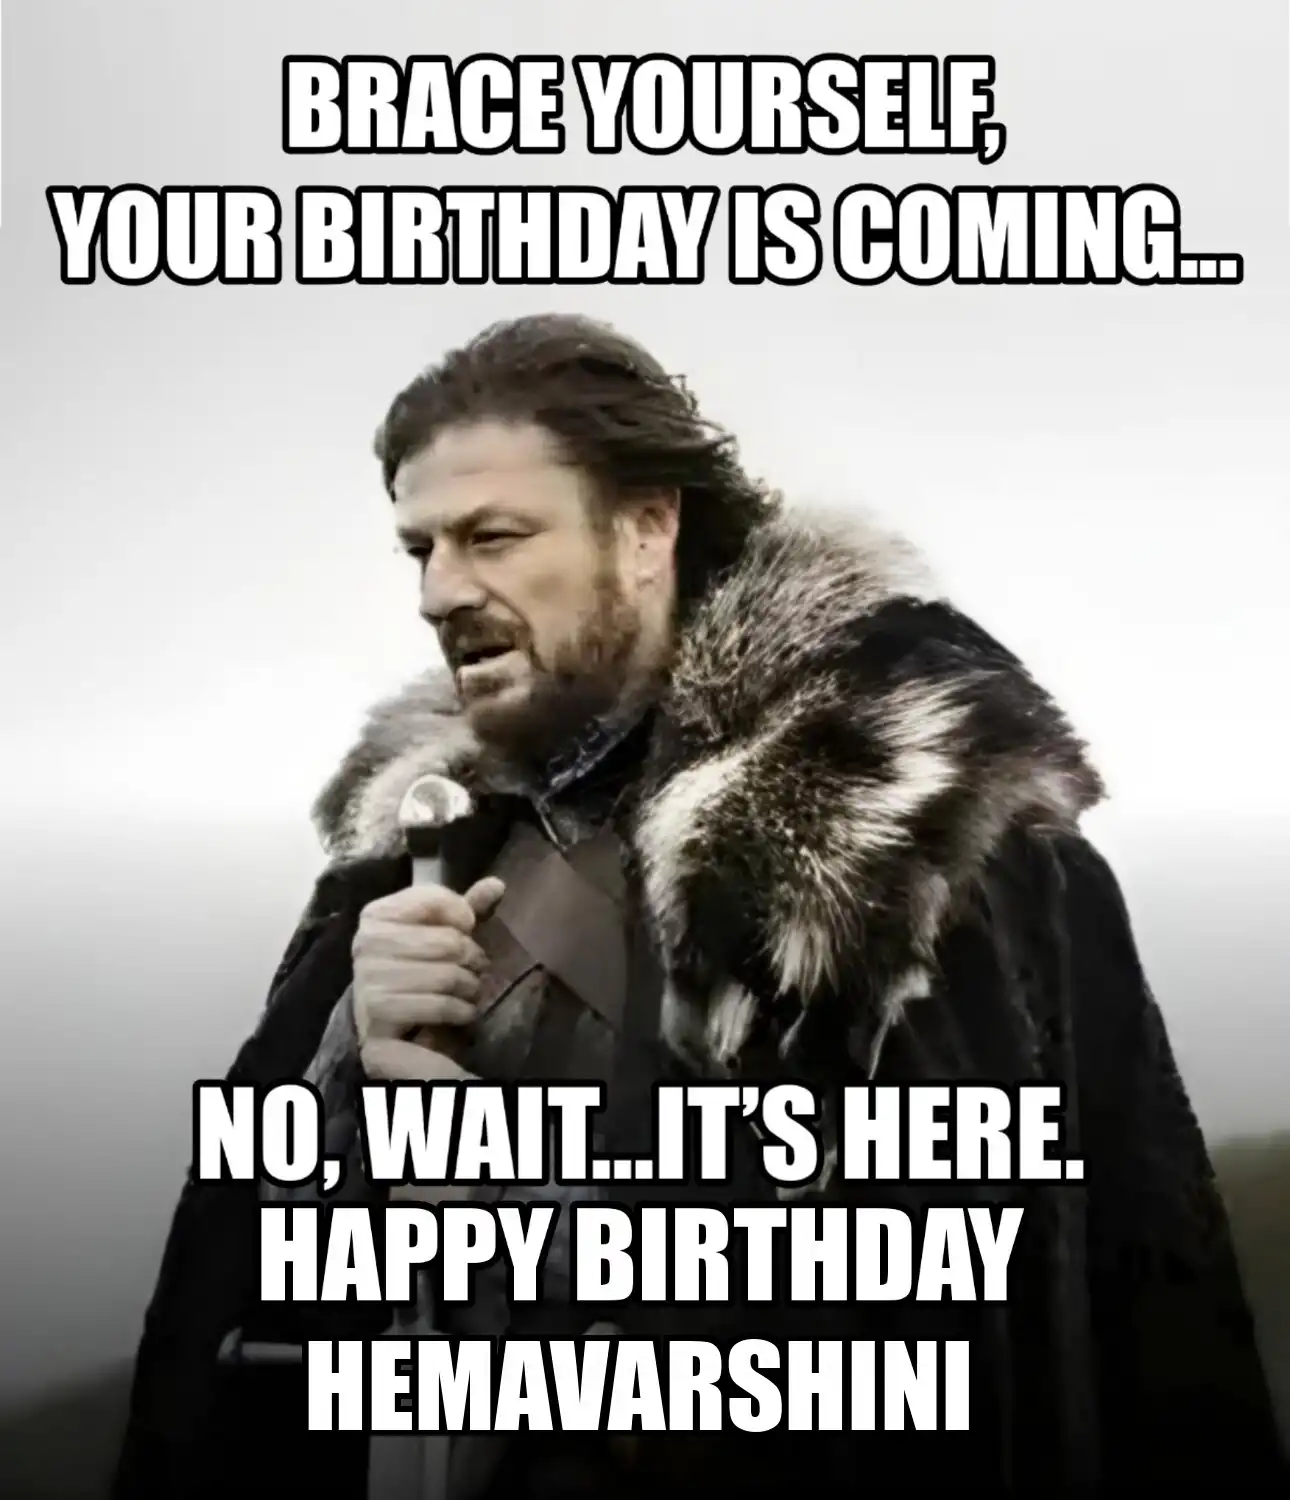 Happy Birthday Hemavarshini Brace Yourself Your Birthday Is Coming Meme